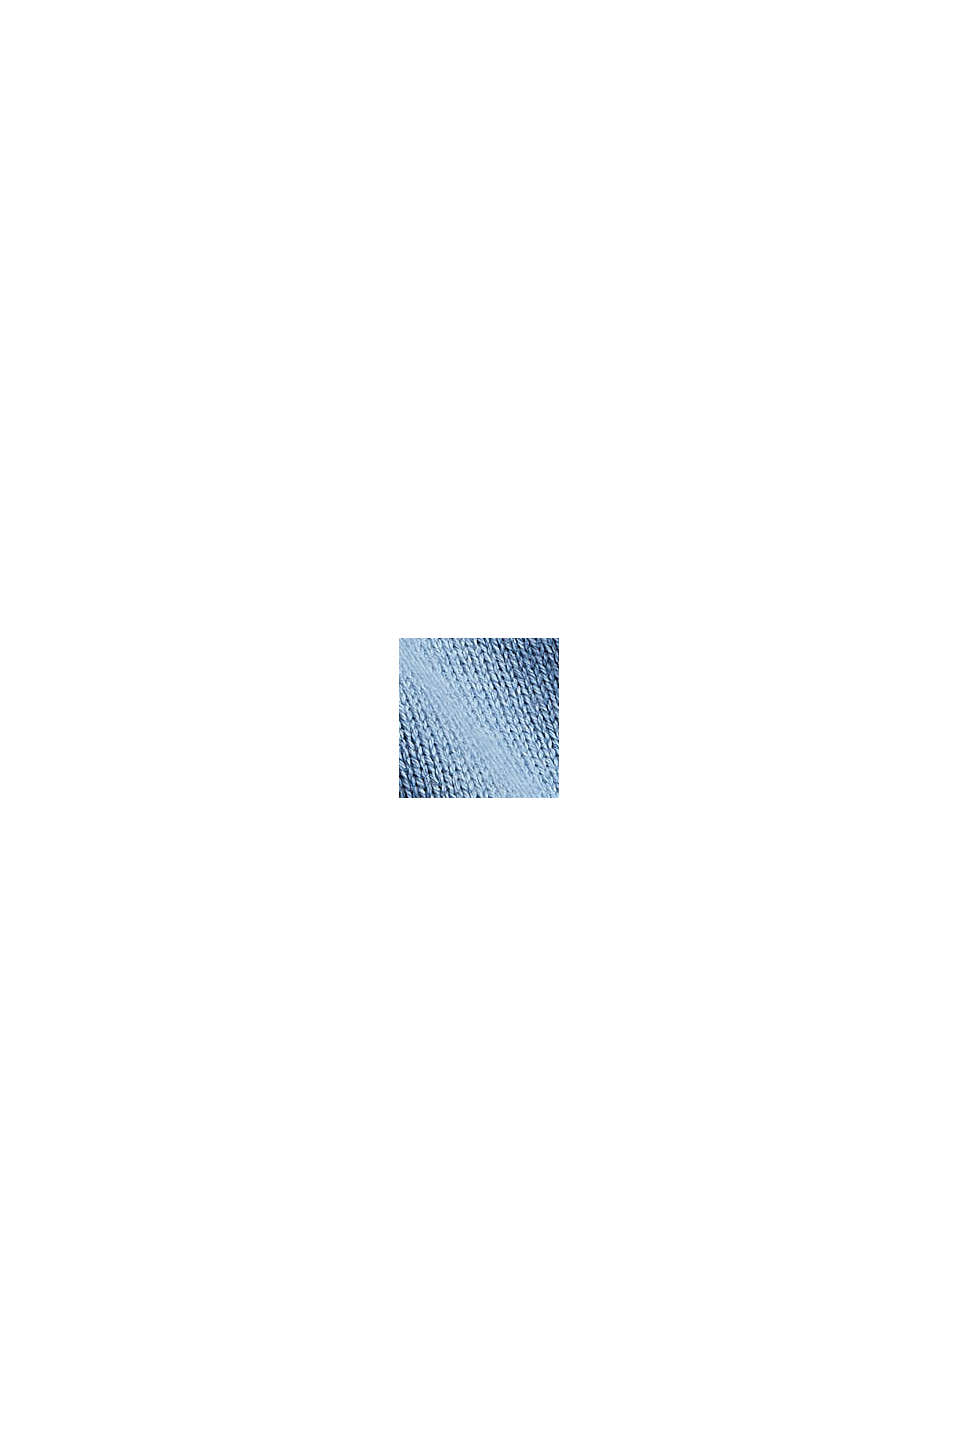 Jersey con diseño de punto texturizado, algodón ecológico, LIGHT BLUE, swatch